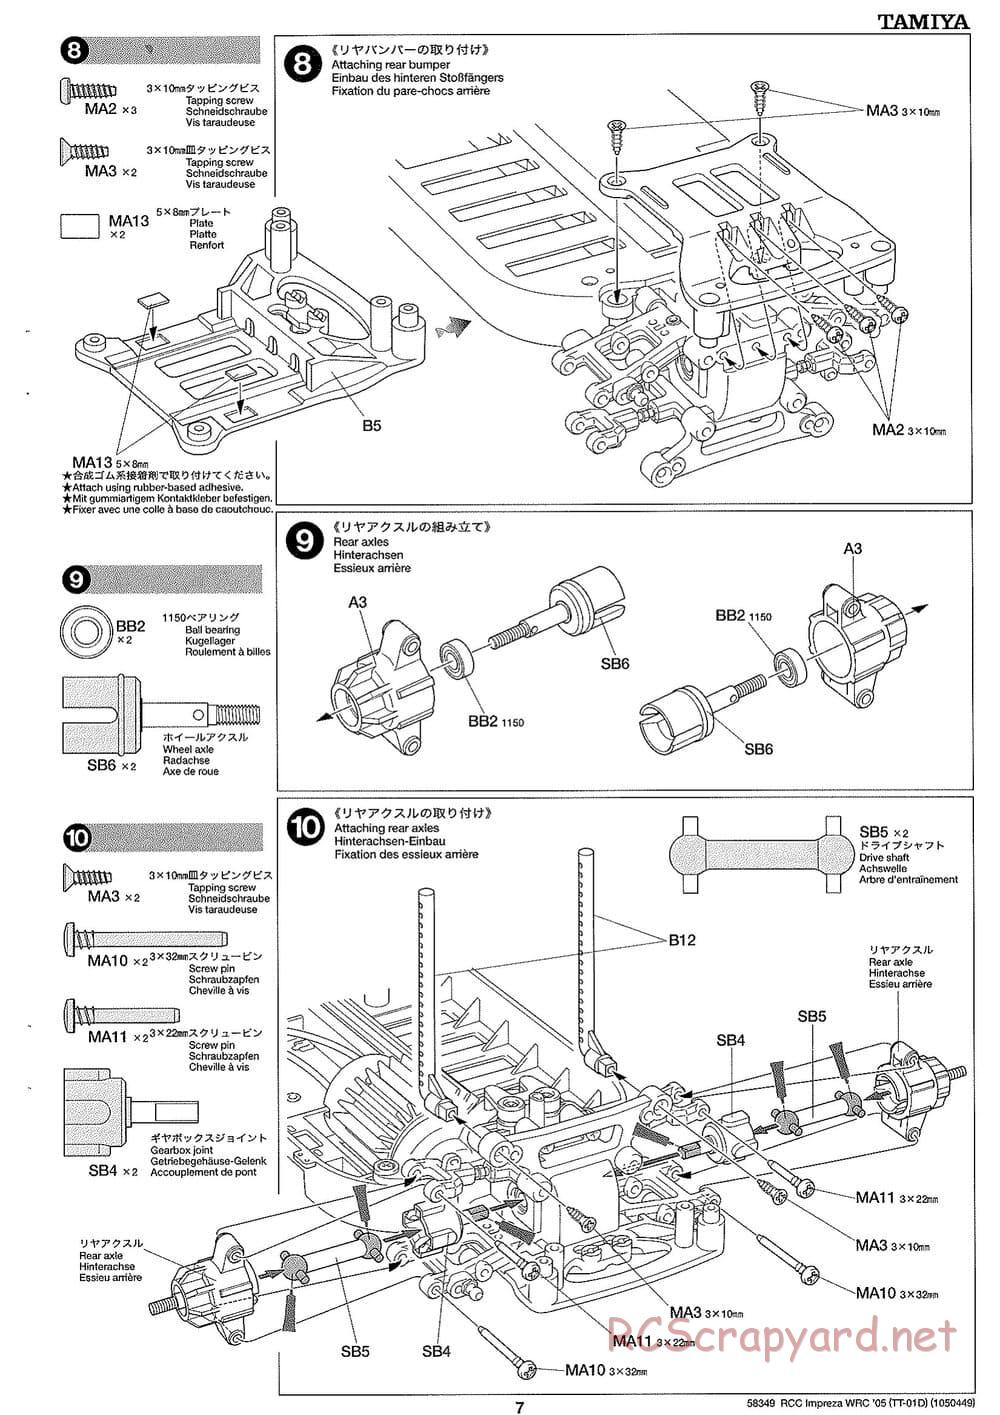 Tamiya - Subaru Impreza WRC Monte Carlo 05 - Drift Spec - TT-01D Chassis - Manual - Page 7